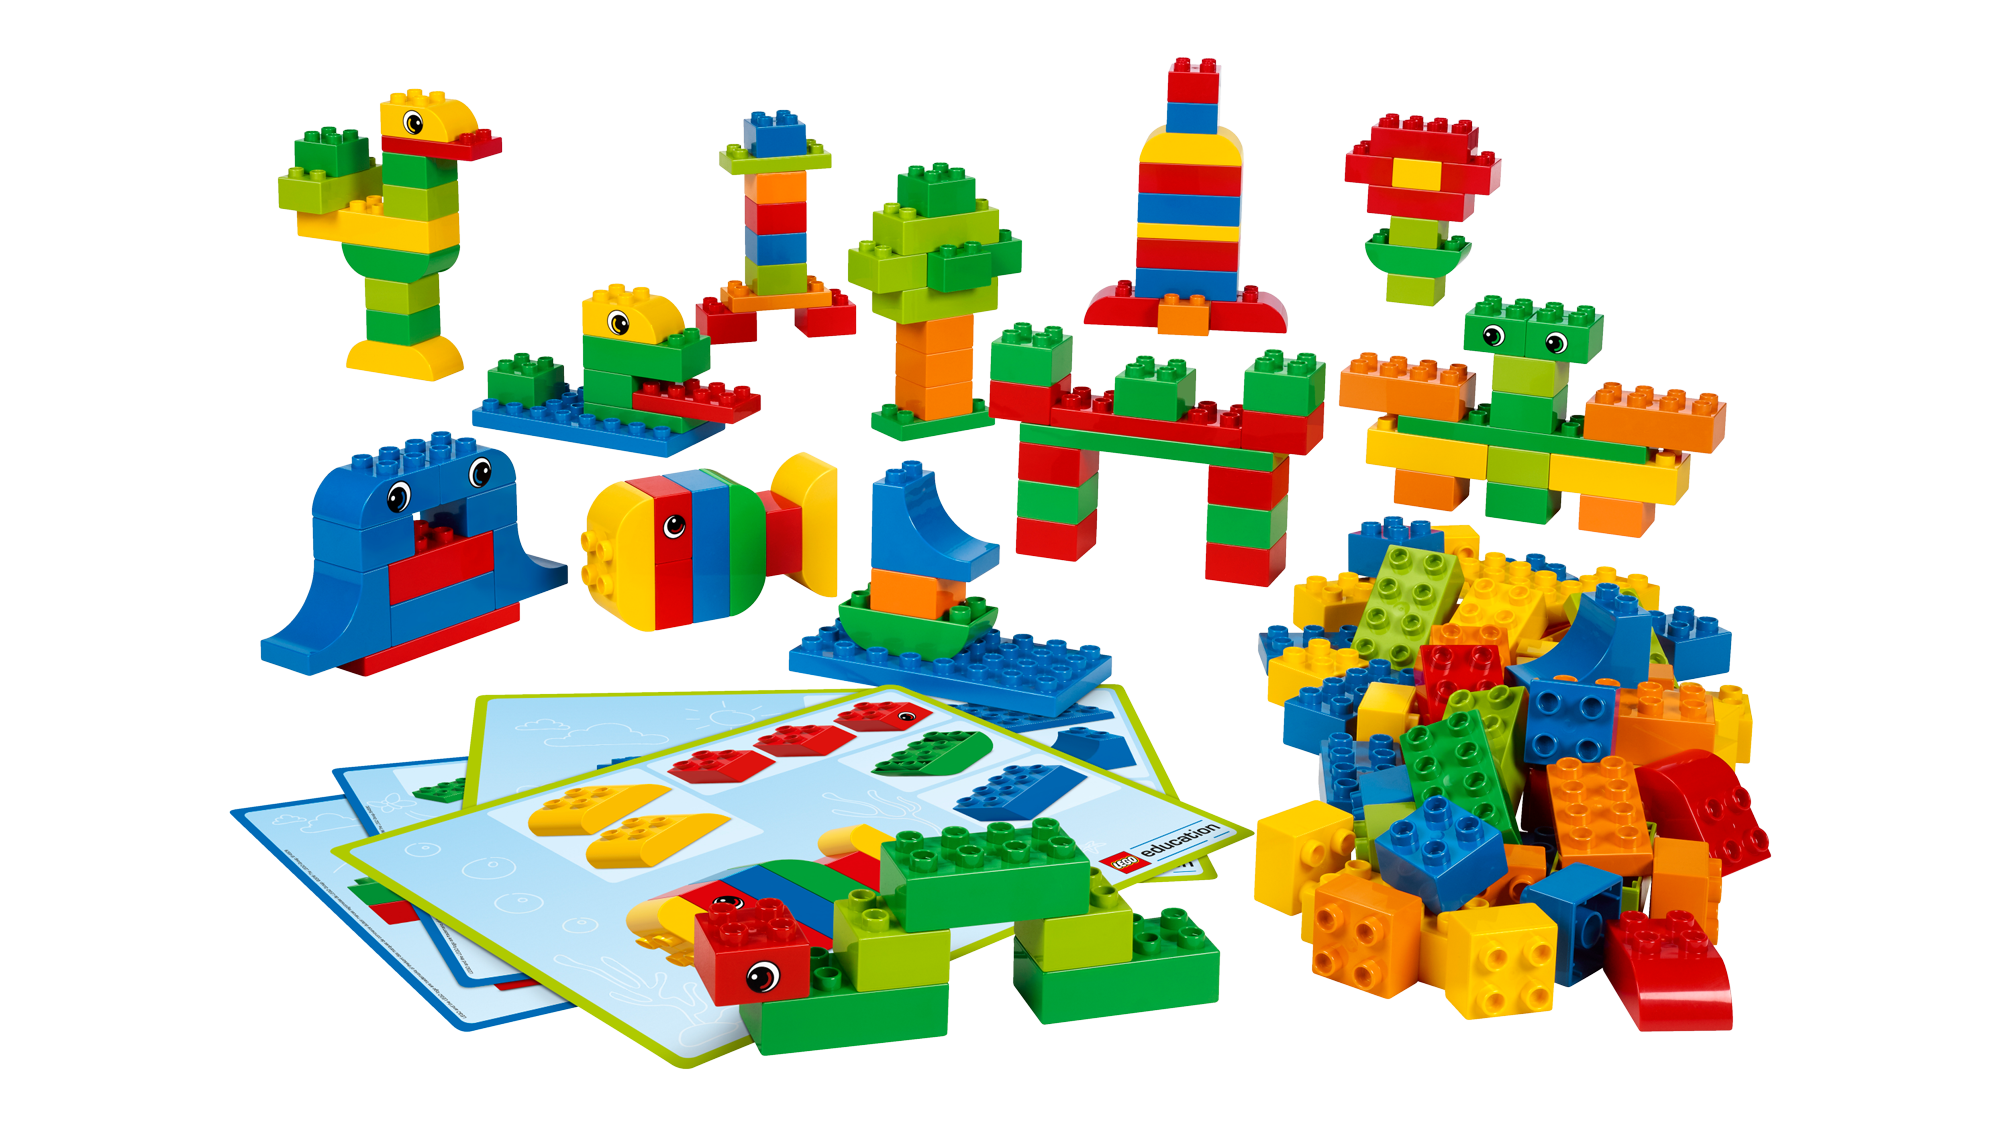 lego education creative brick set